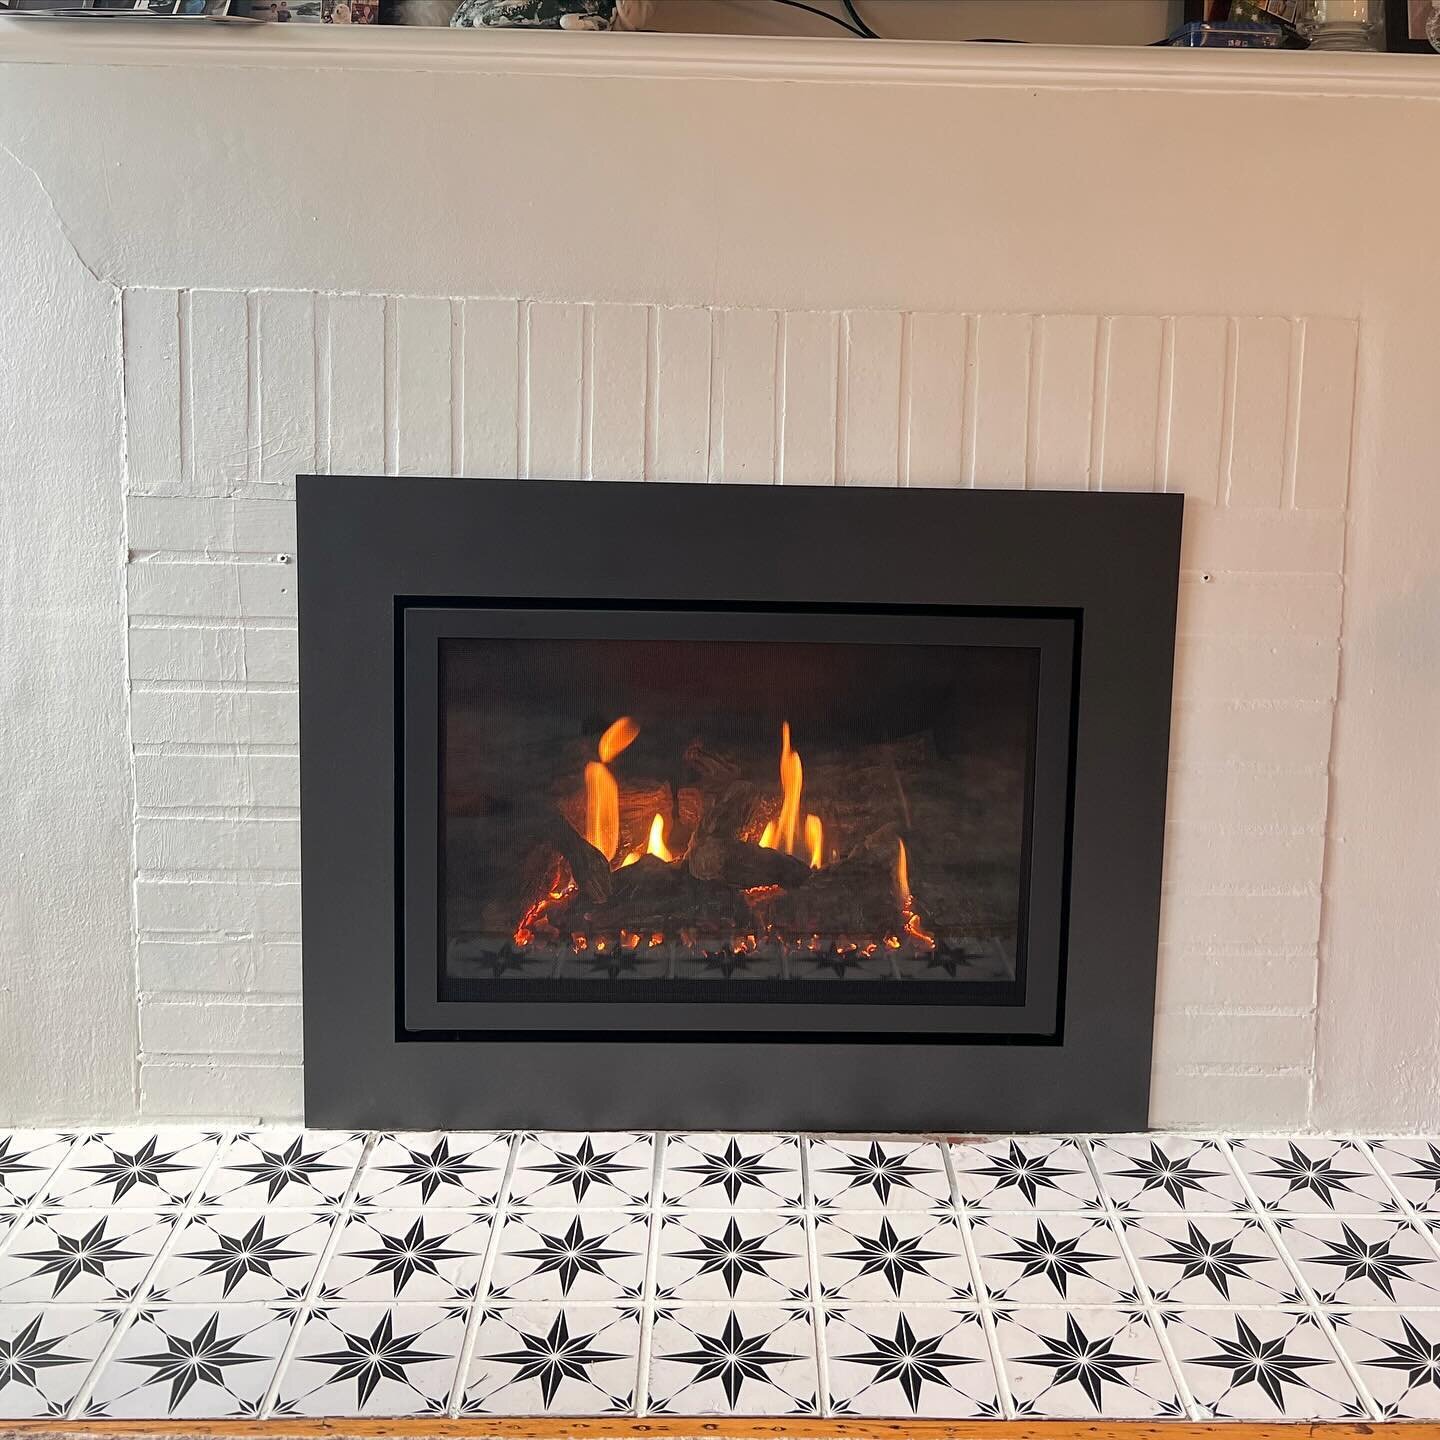 @archgardfireplaces Chantico 31 w/ Classic Logs, Black Firebox and Custom 4 Sided Surround

#gasinsert #fireplace #fireplaceupgrade